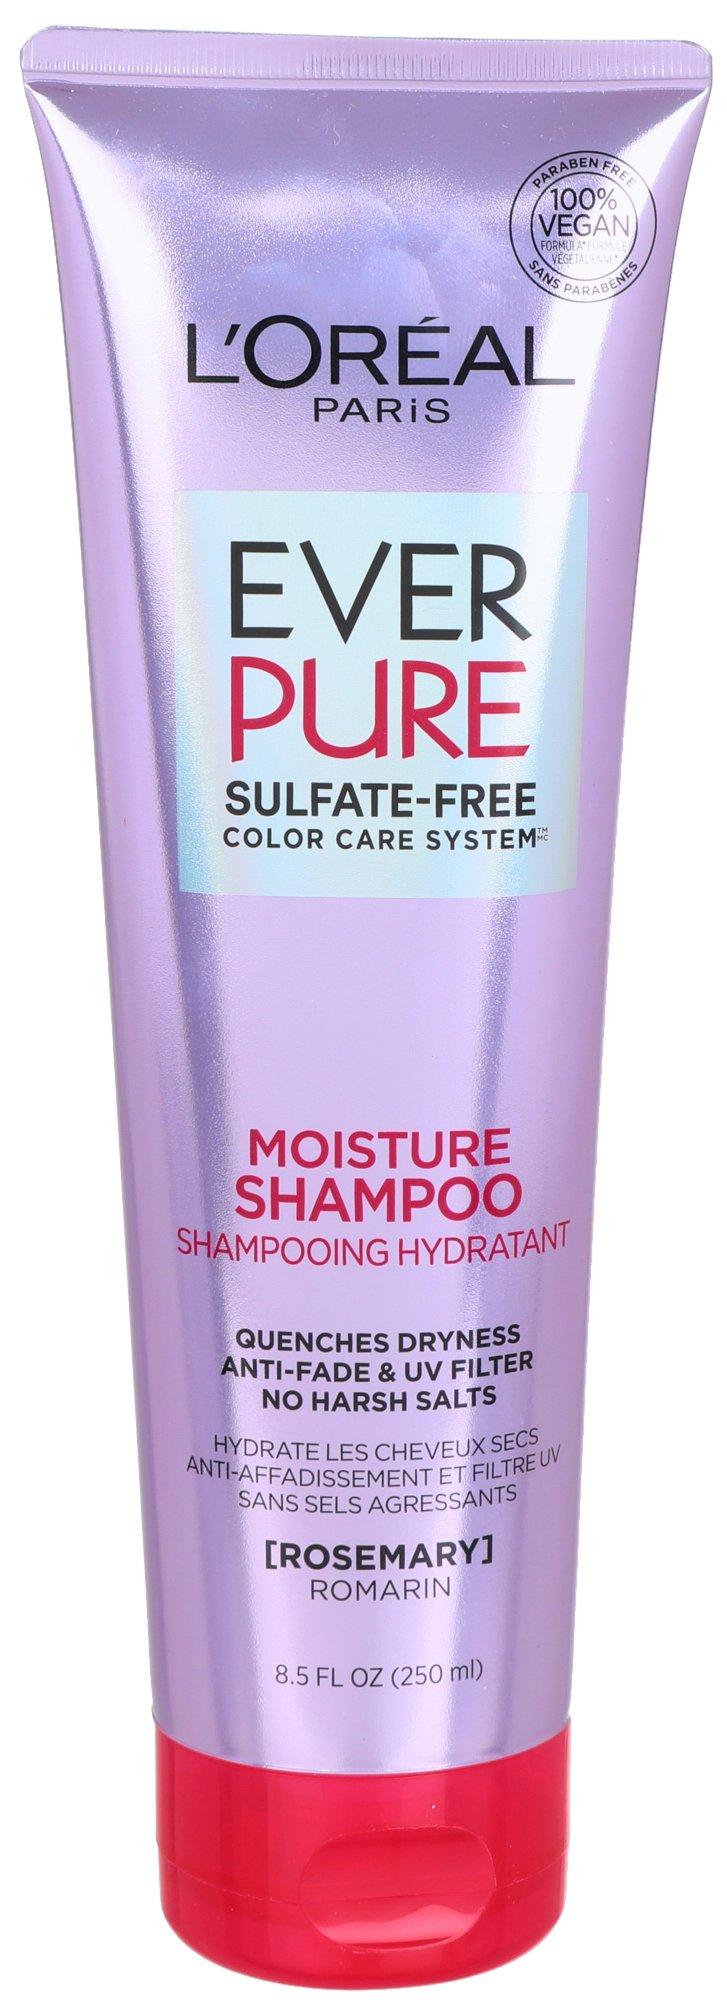 L'Oreal Ever Pure Rosemary Moisture Shampoo 8.5 Fl.